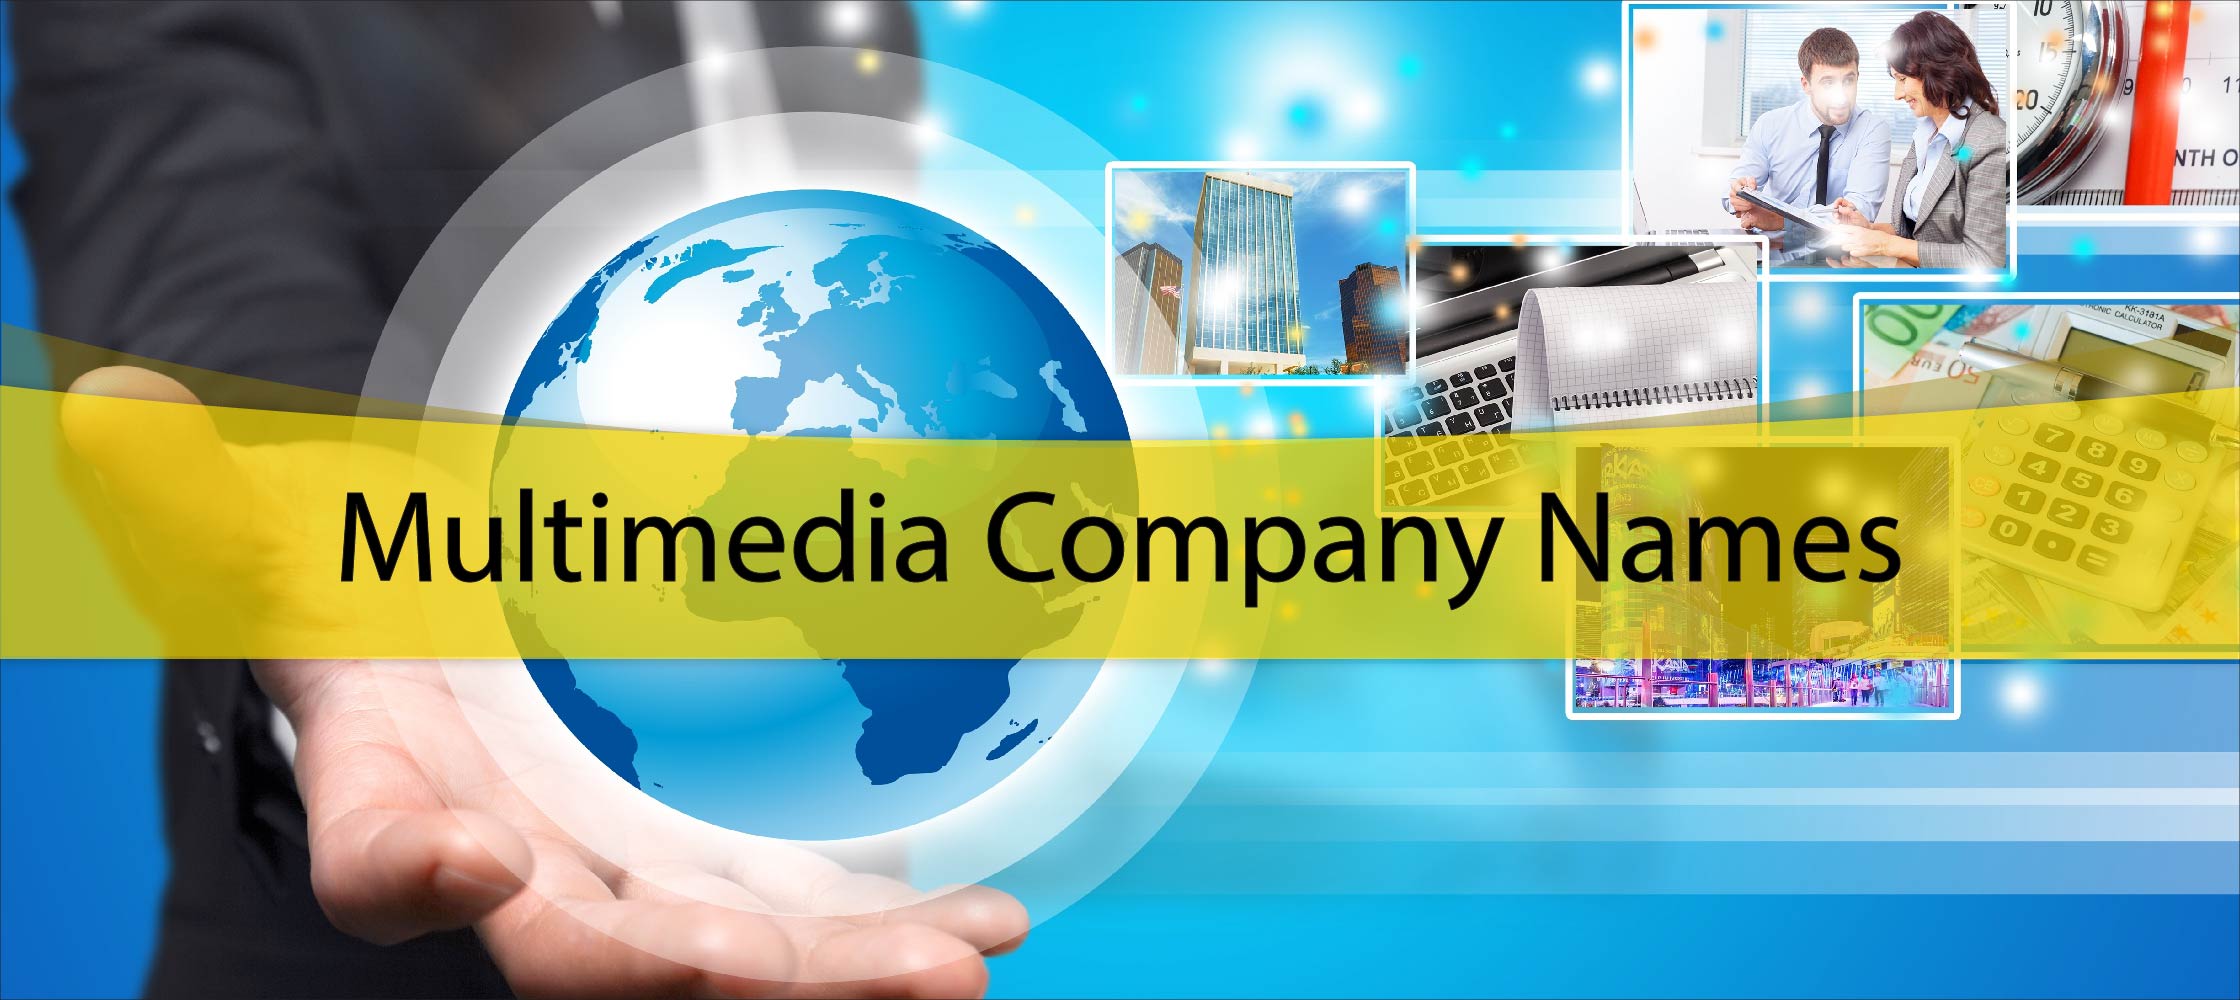 Multimedia Company Names